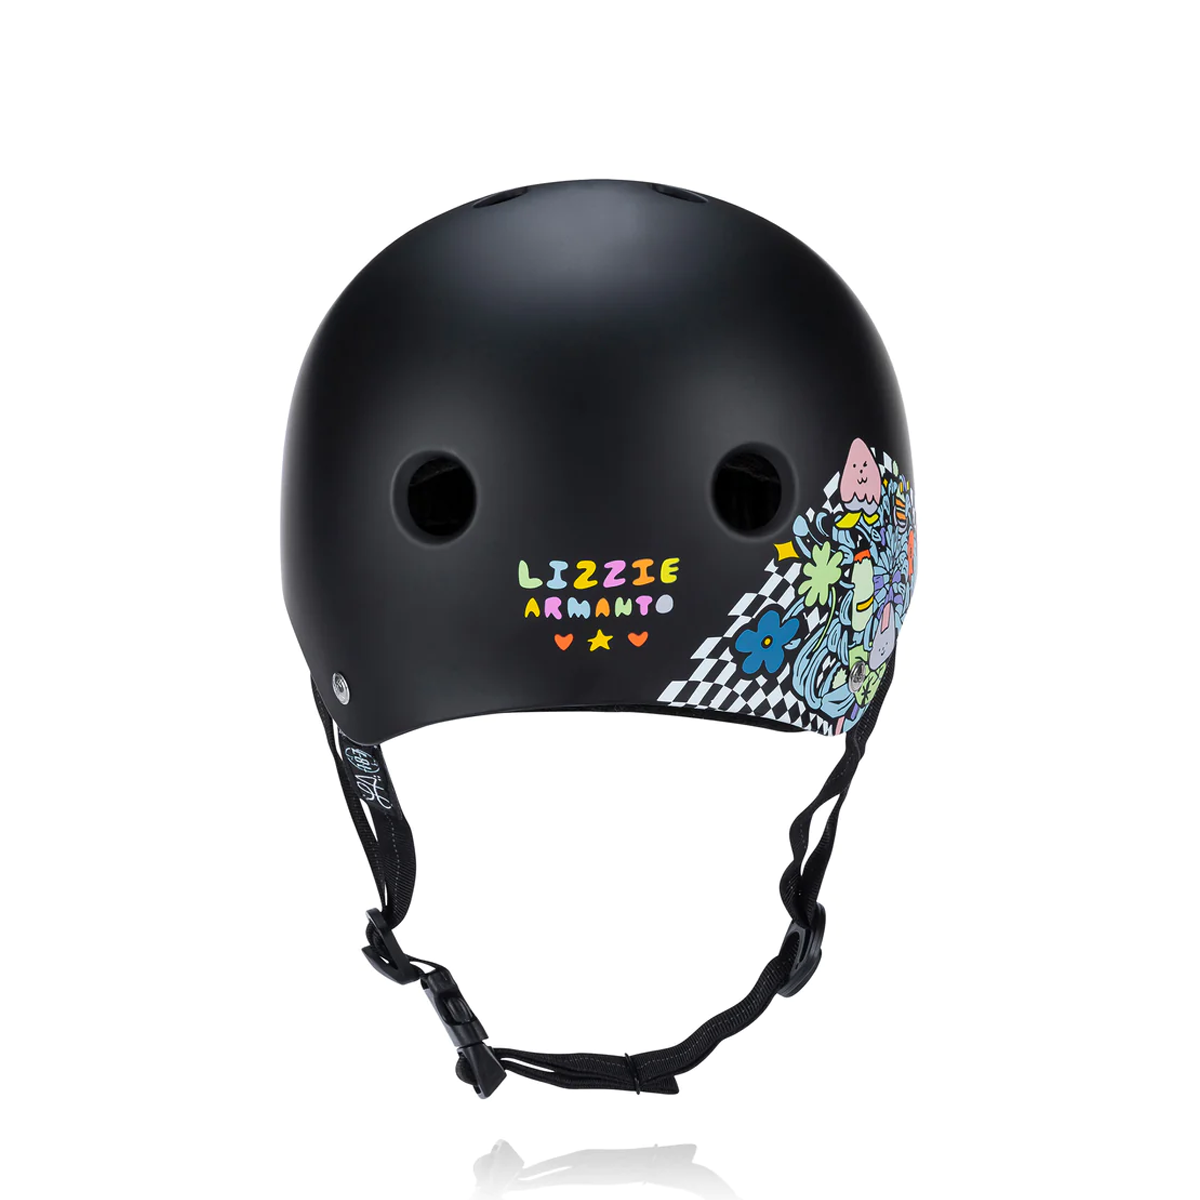 187 Killer Pads Pro Skate Helmet W/ Sweatsaver Liner - Lizzie Armanto